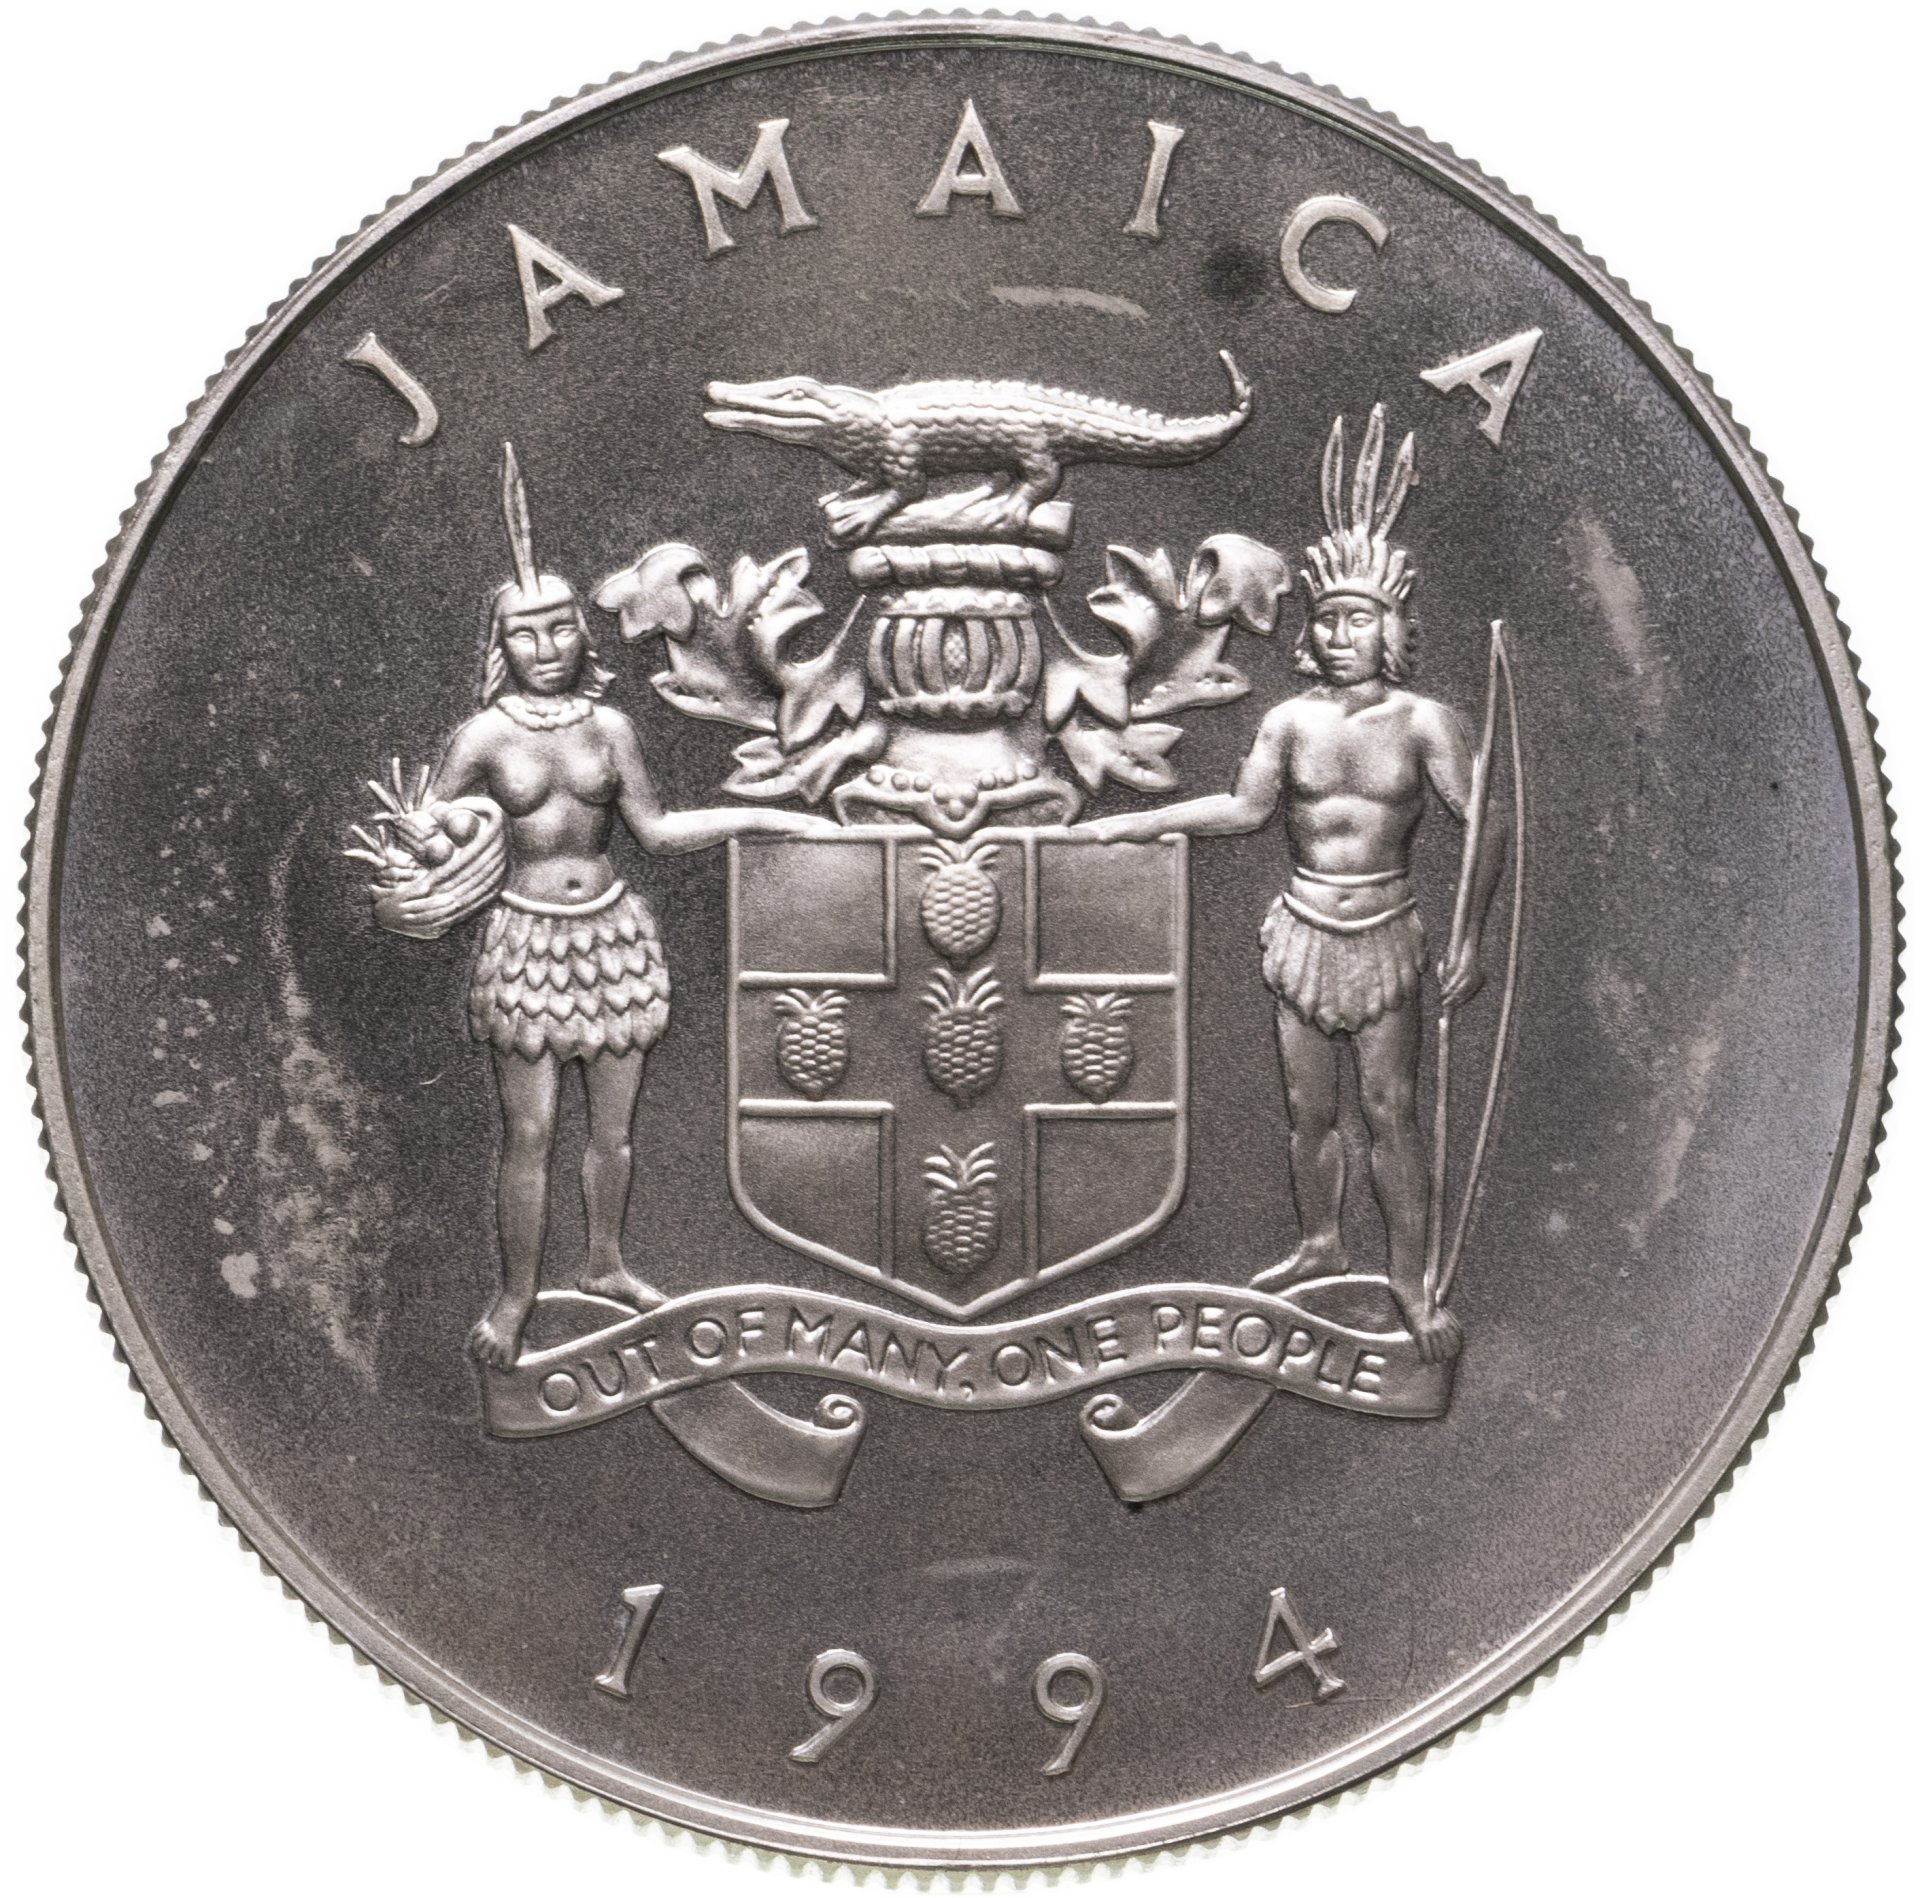 Ямайка 5 долларов, 1994-2018. Науру 10 долларов 1994 Королева. Бермуды 2 доллара, 1994 морской конек.